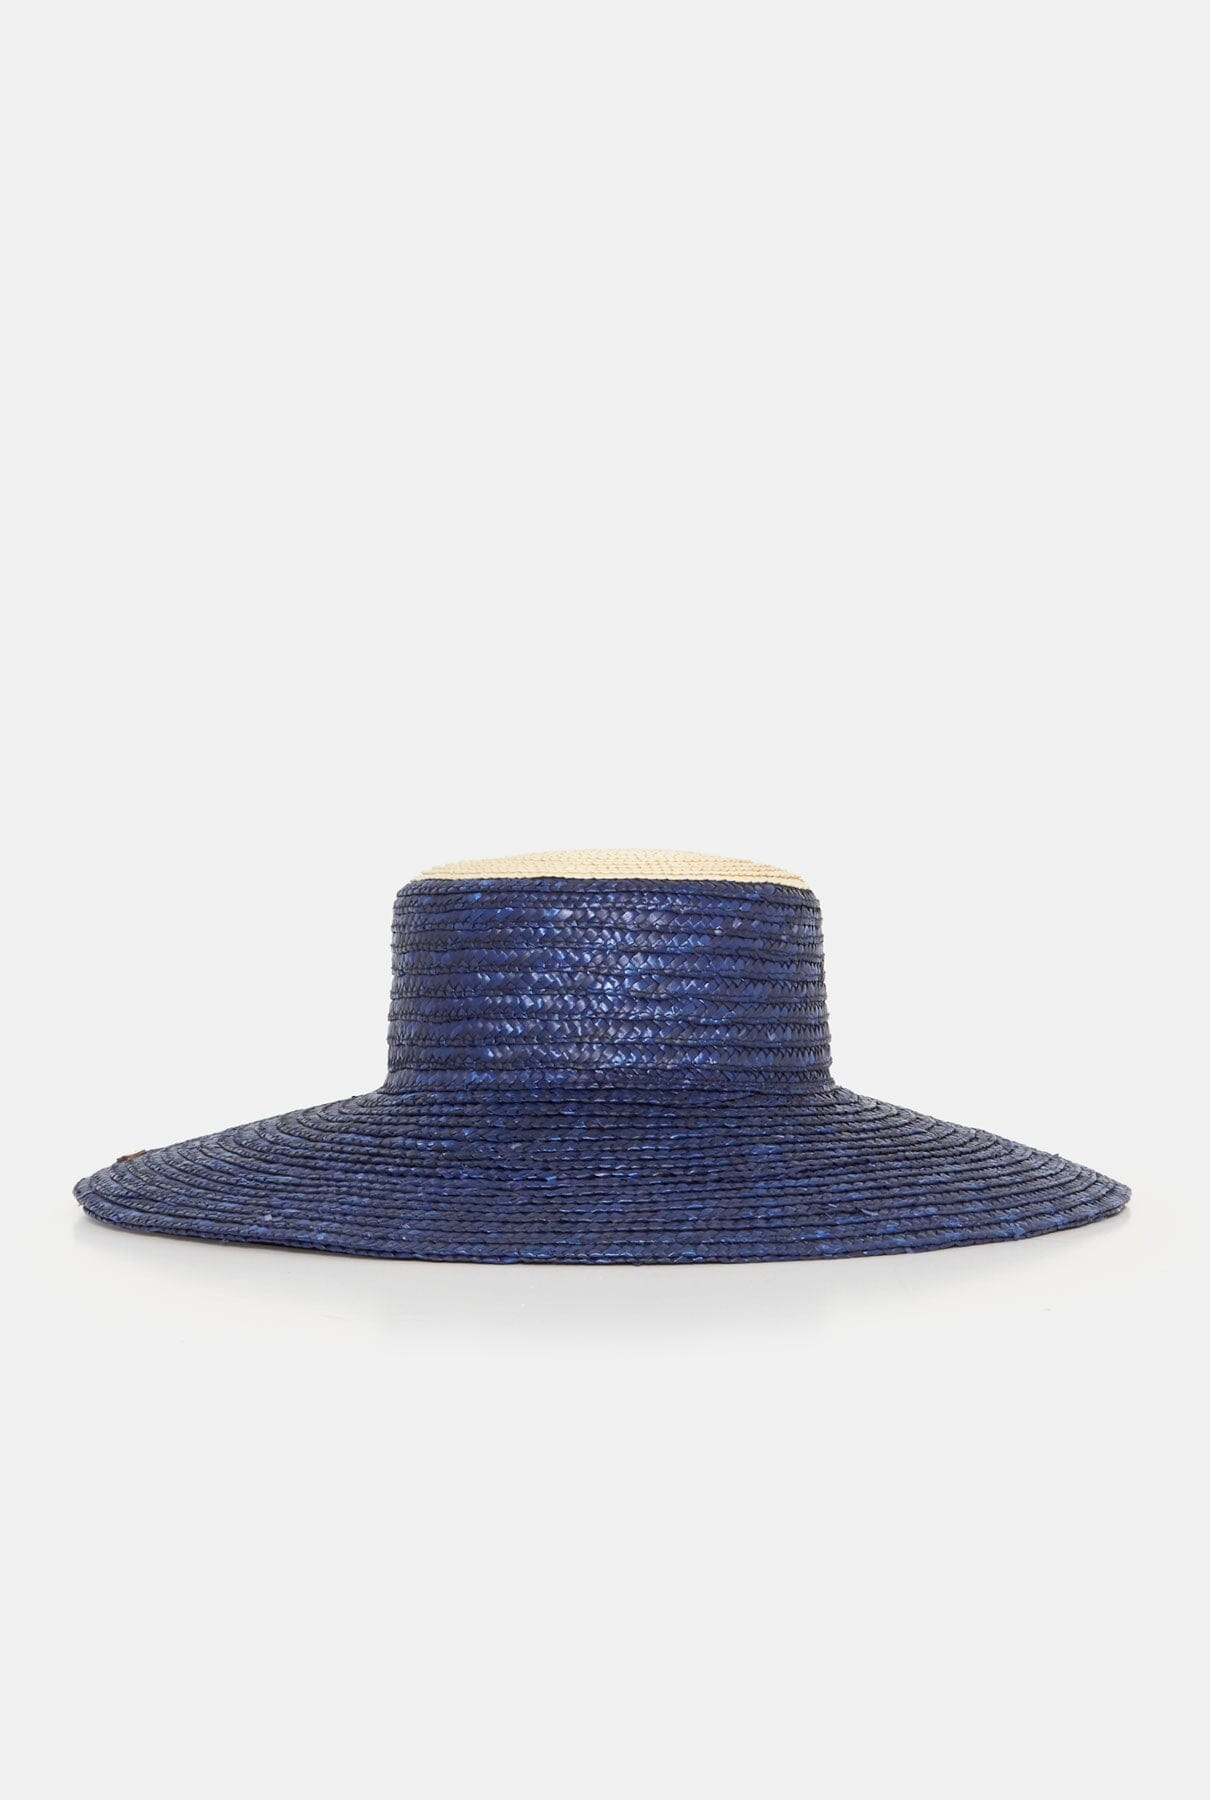 Cuchi blue and white Hats Zahati 